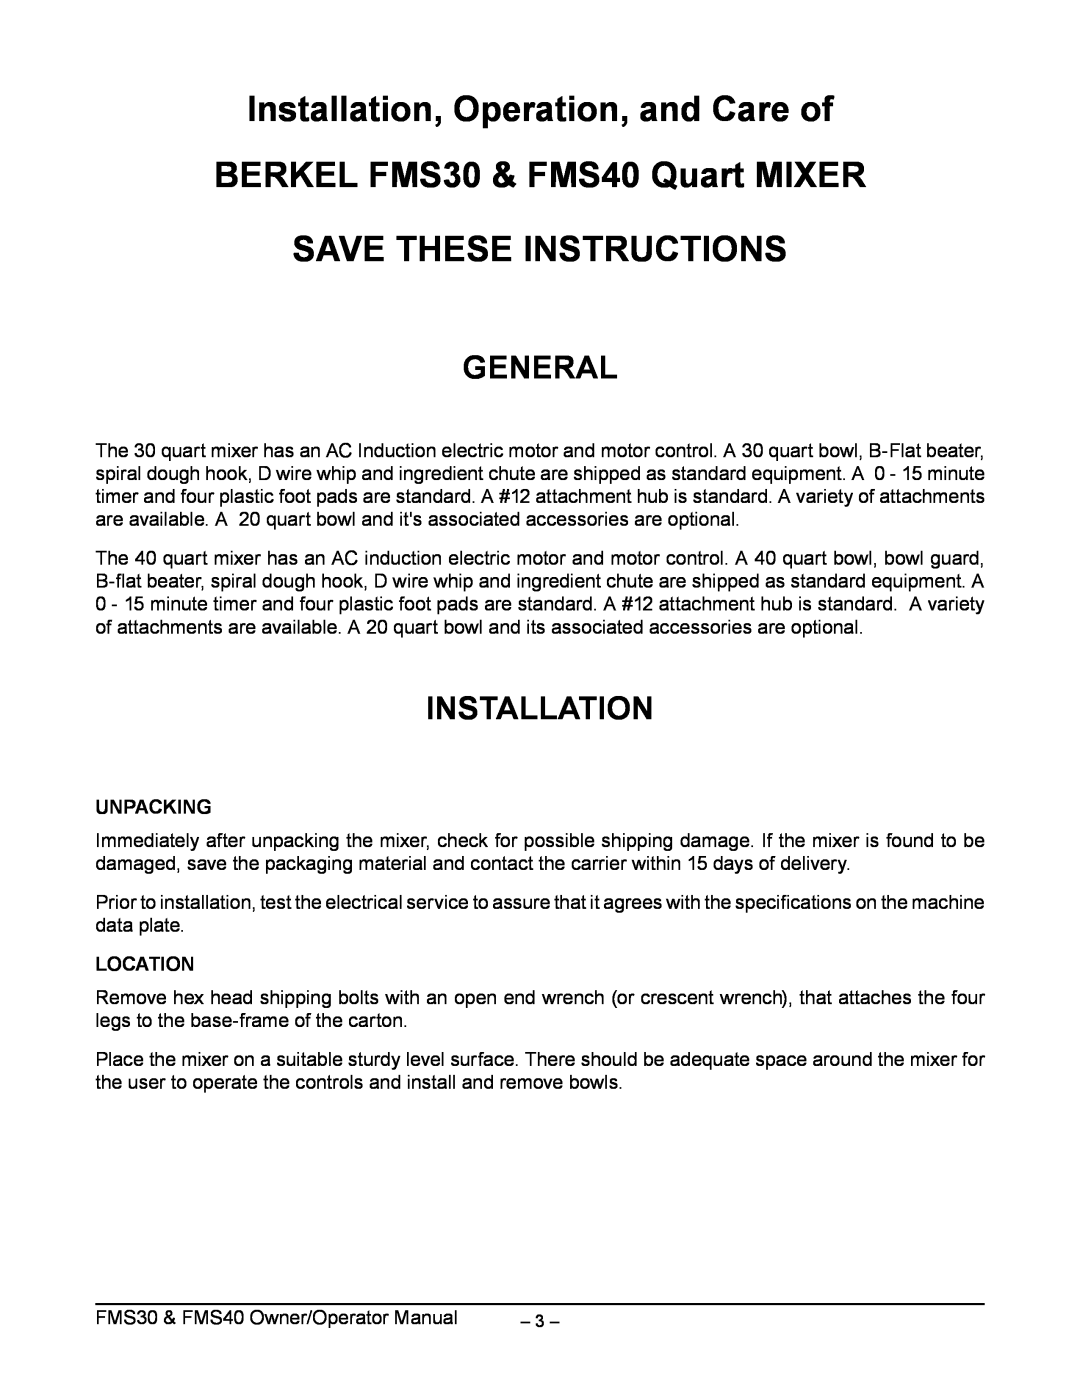 Berkel manual General, Unpacking, Location, Installation, Operation, and Care of, BERKEL FMS30 & FMS40 Quart MIXER 